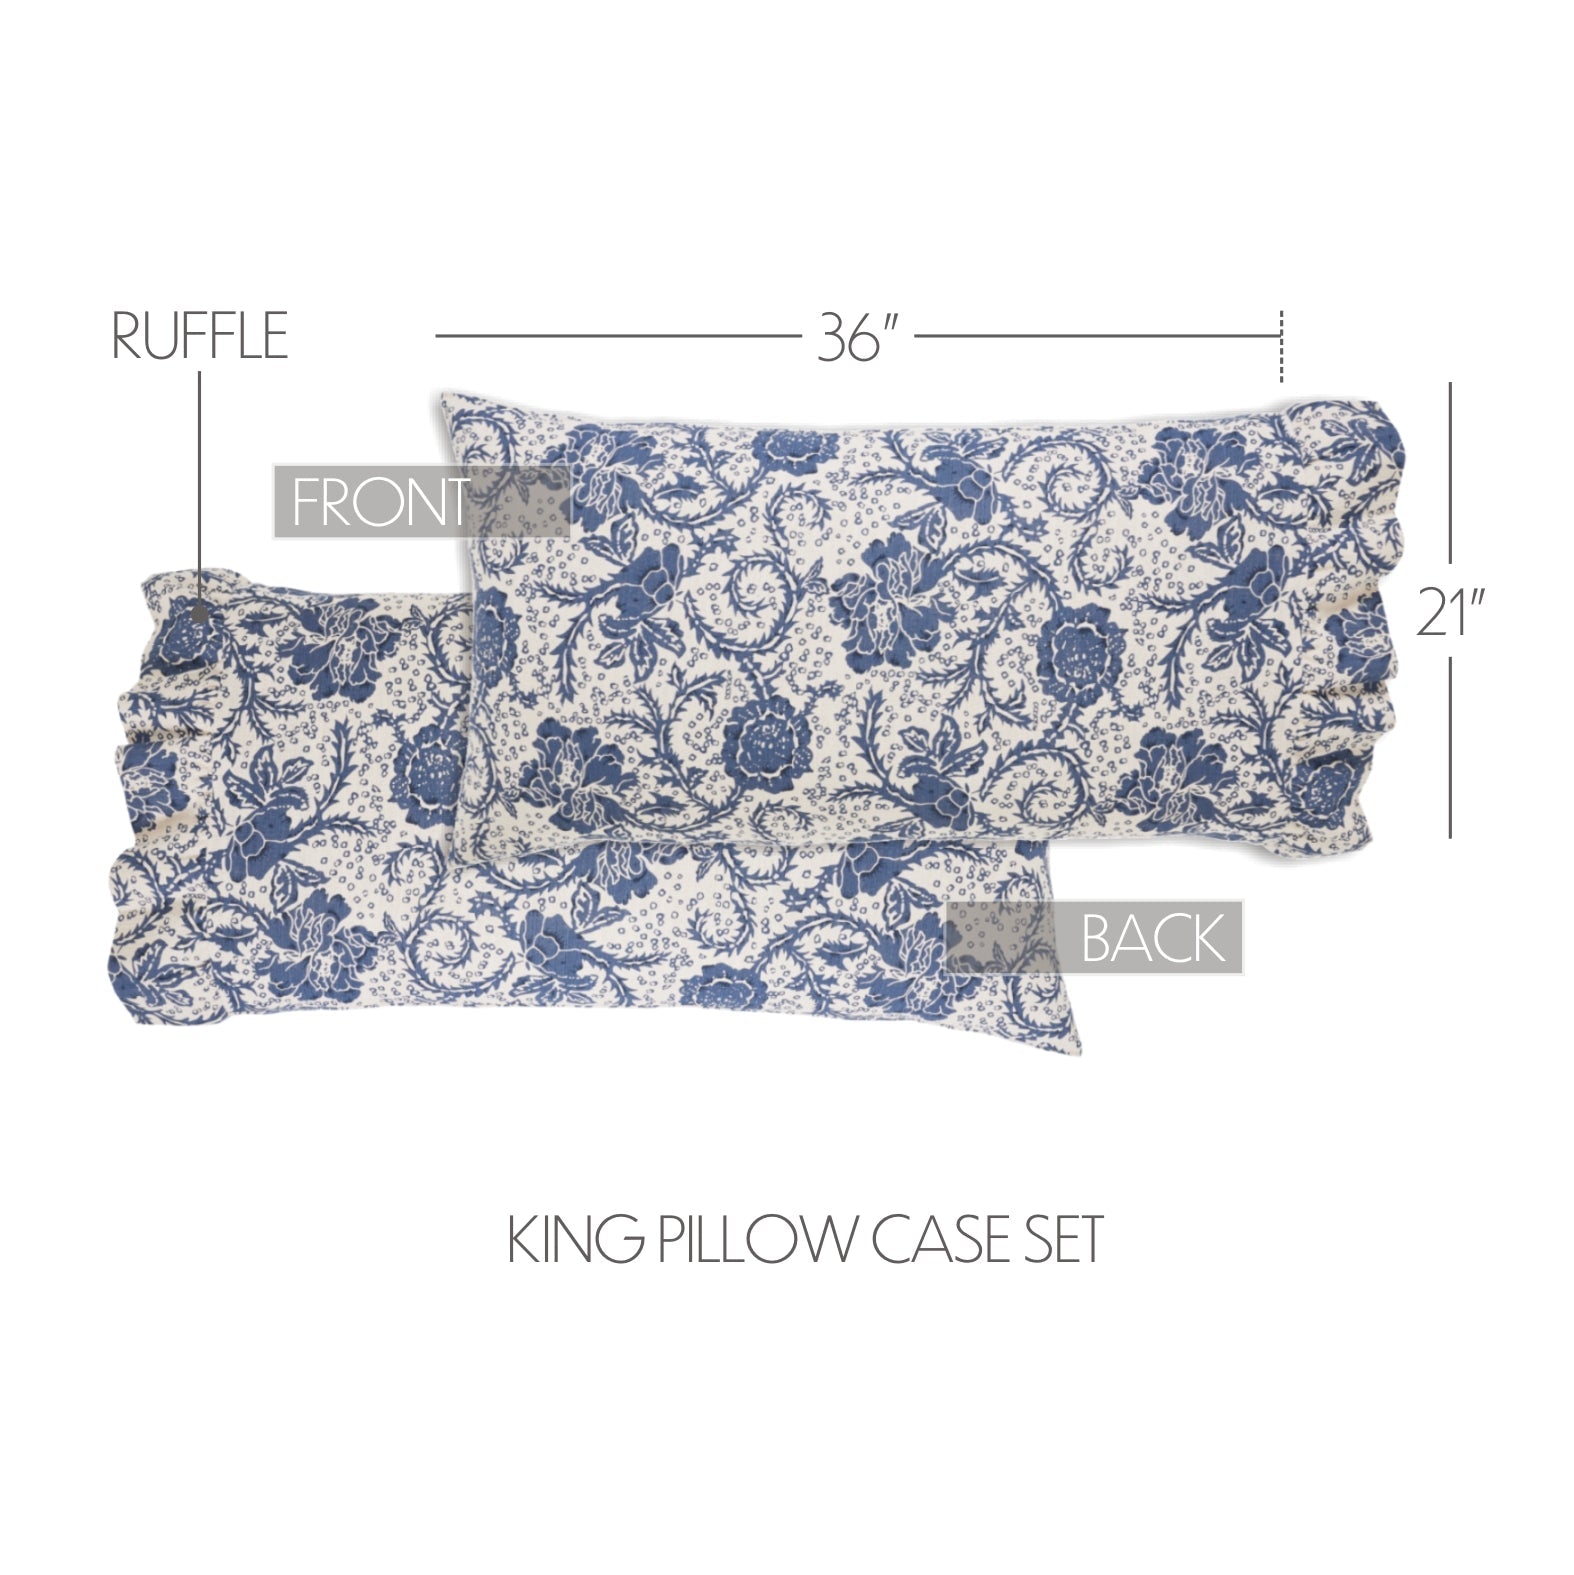 Dorset Navy Floral Ruffled King Pillow Case Set of 2 21x36+4 VHC Brands